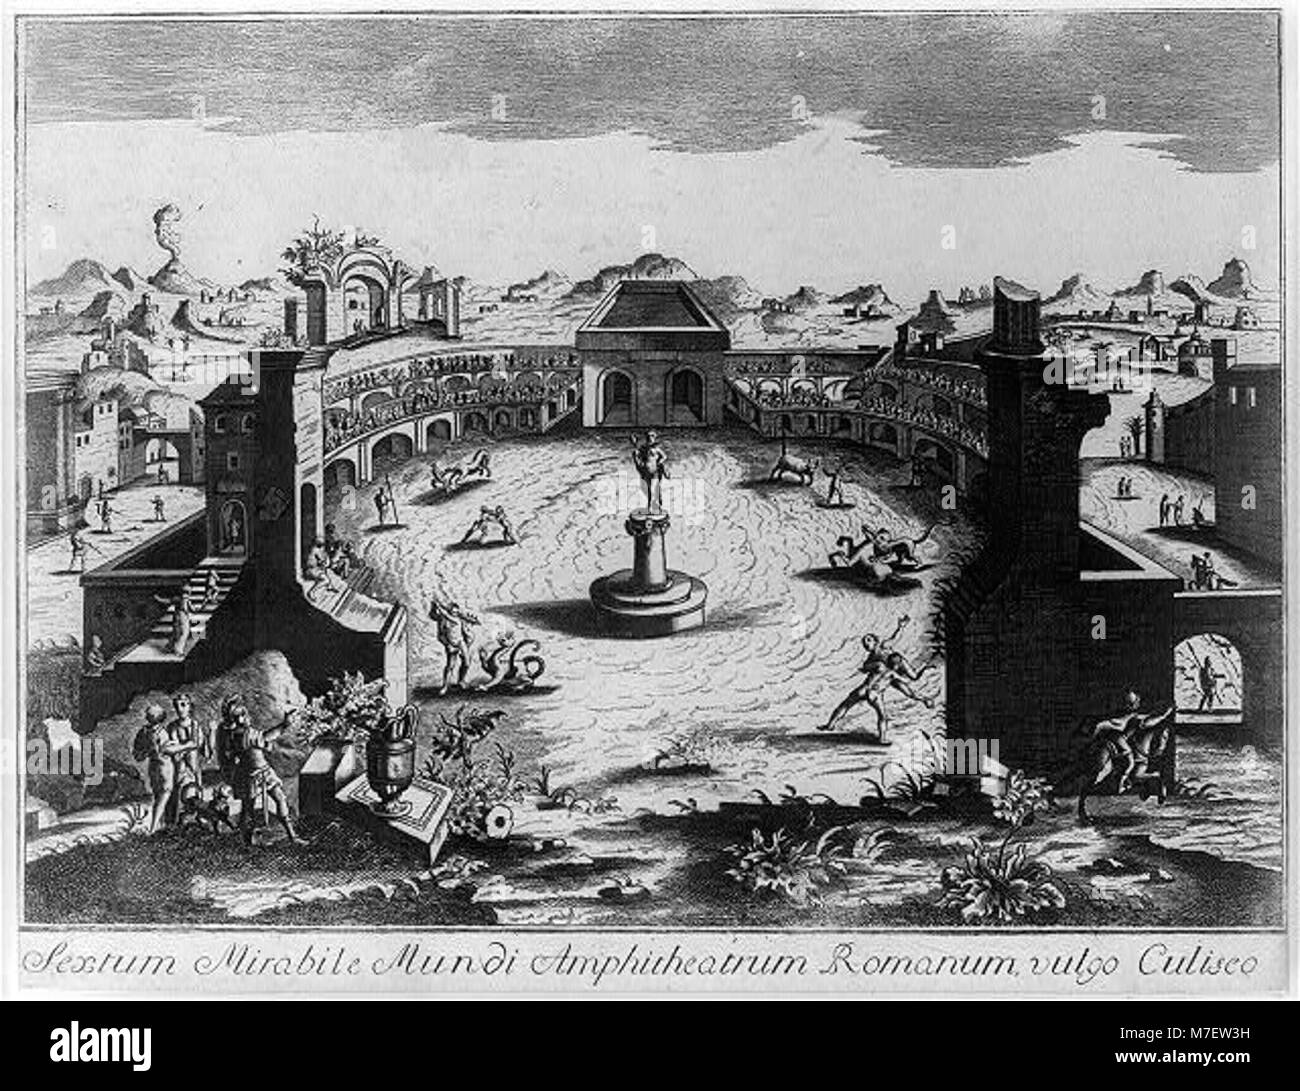 Sextum mirabile mundi amphitheatrum Romanum, vulgo Culiseo LCCN2004669344 Stock Photo